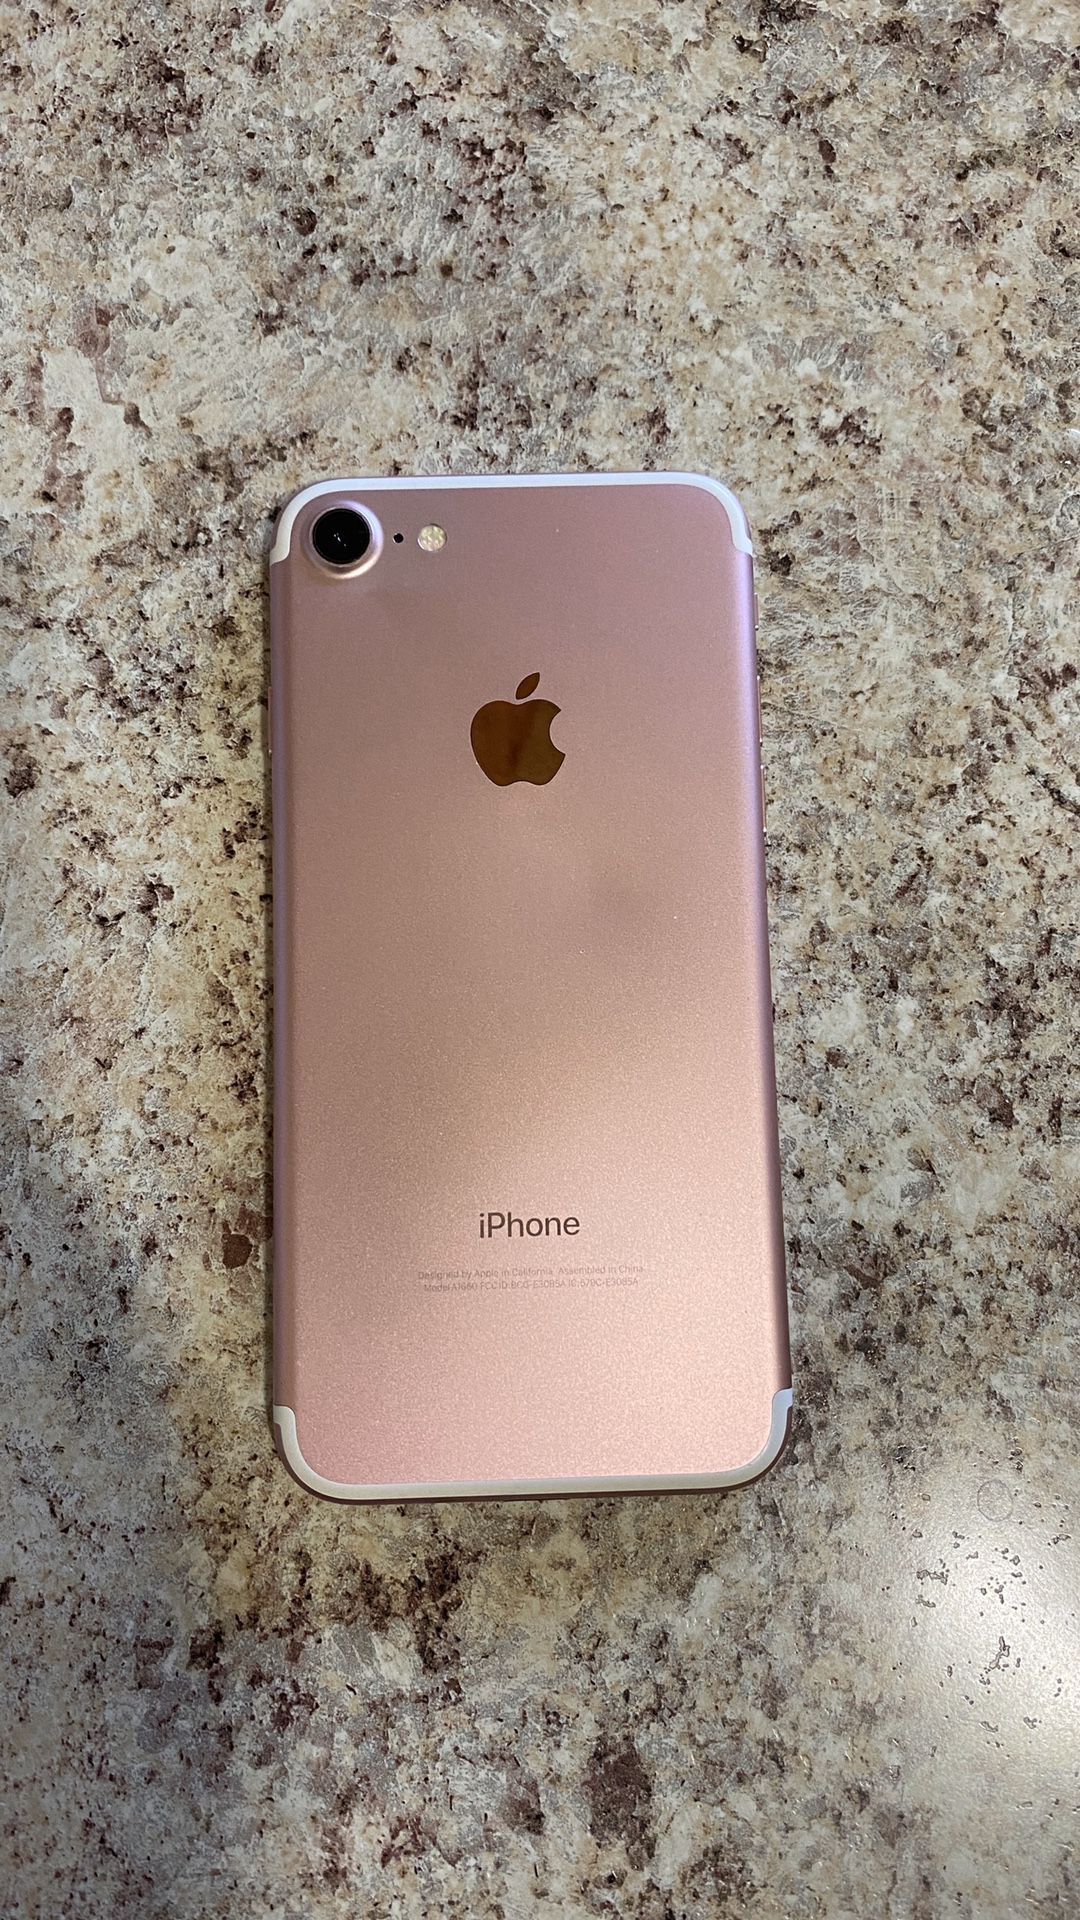 iPhone 7 Rose Gold Unlocked 128 GB $220